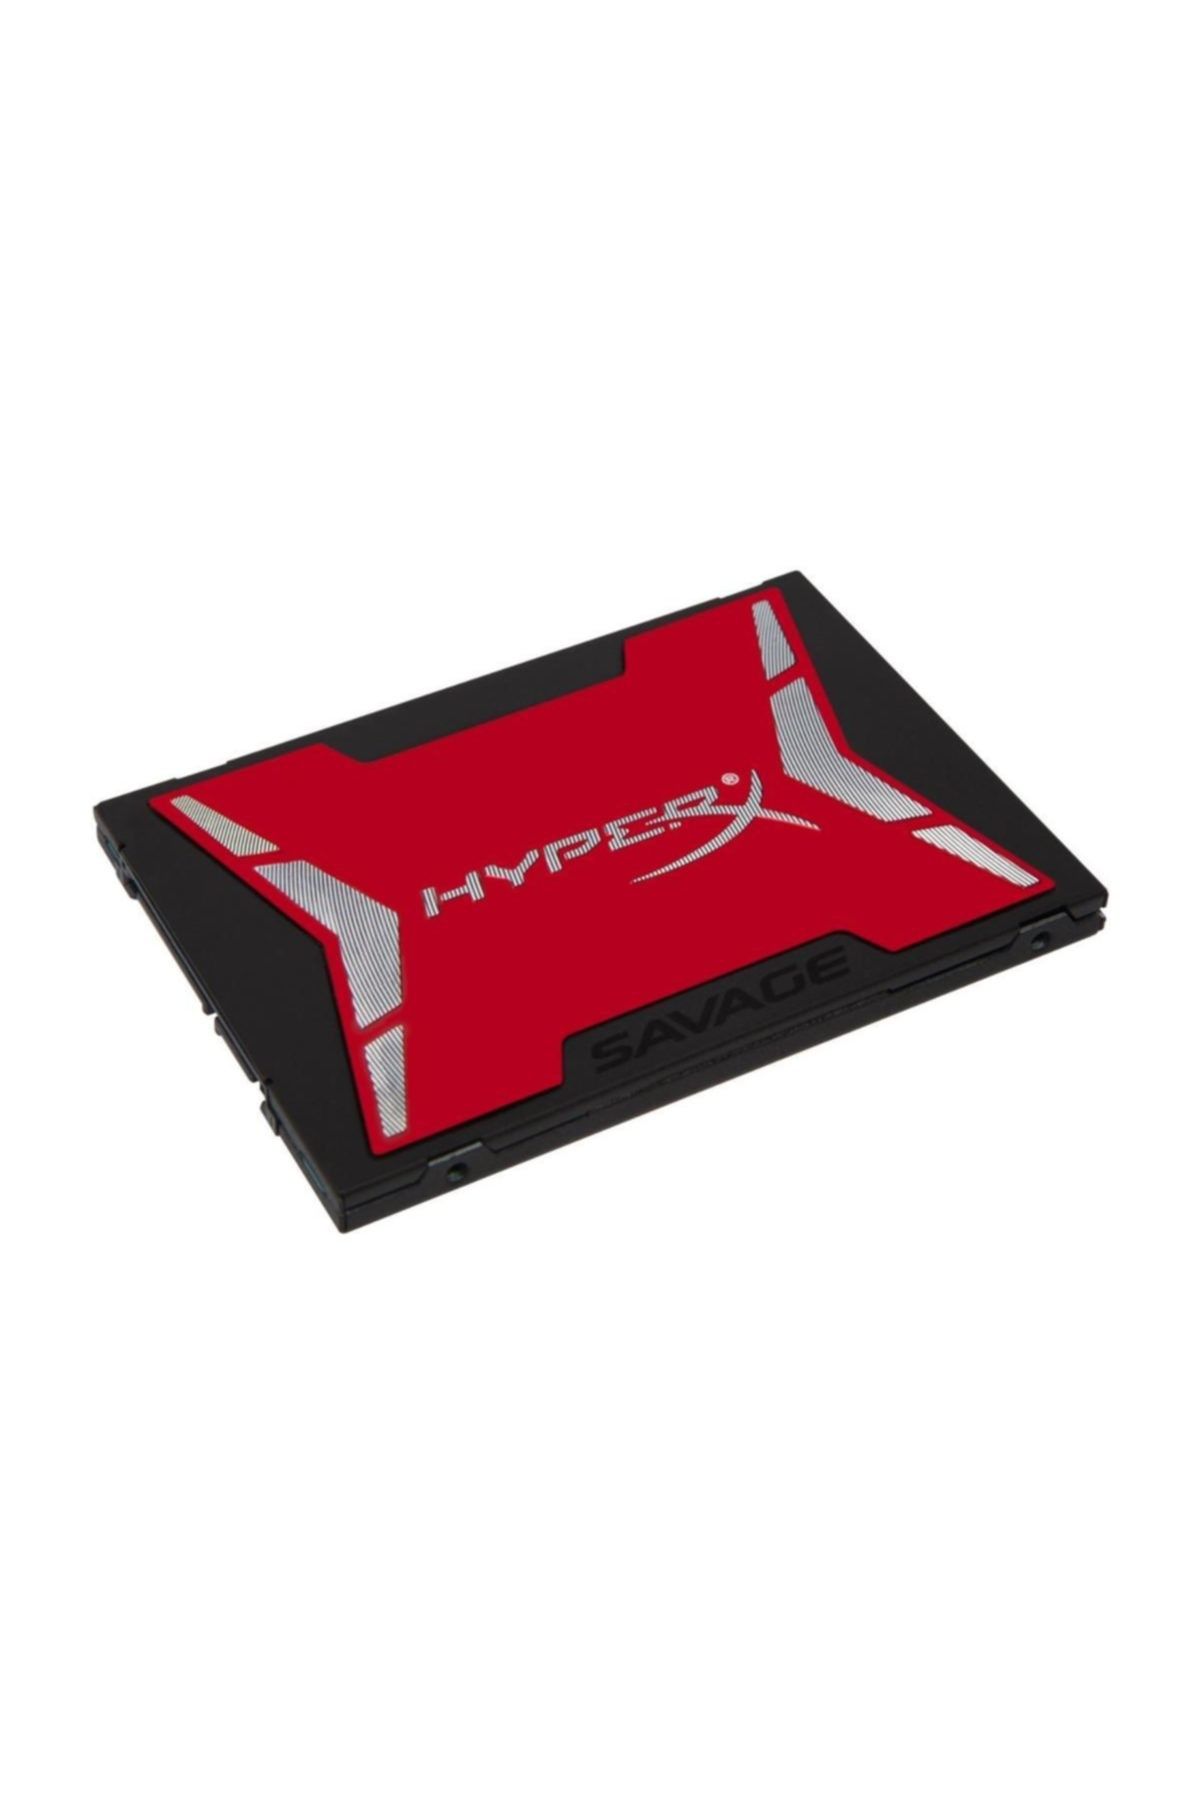 Kingston HyperX Savage 480GB Sata 3 SSD Disk SHSS37A/480G